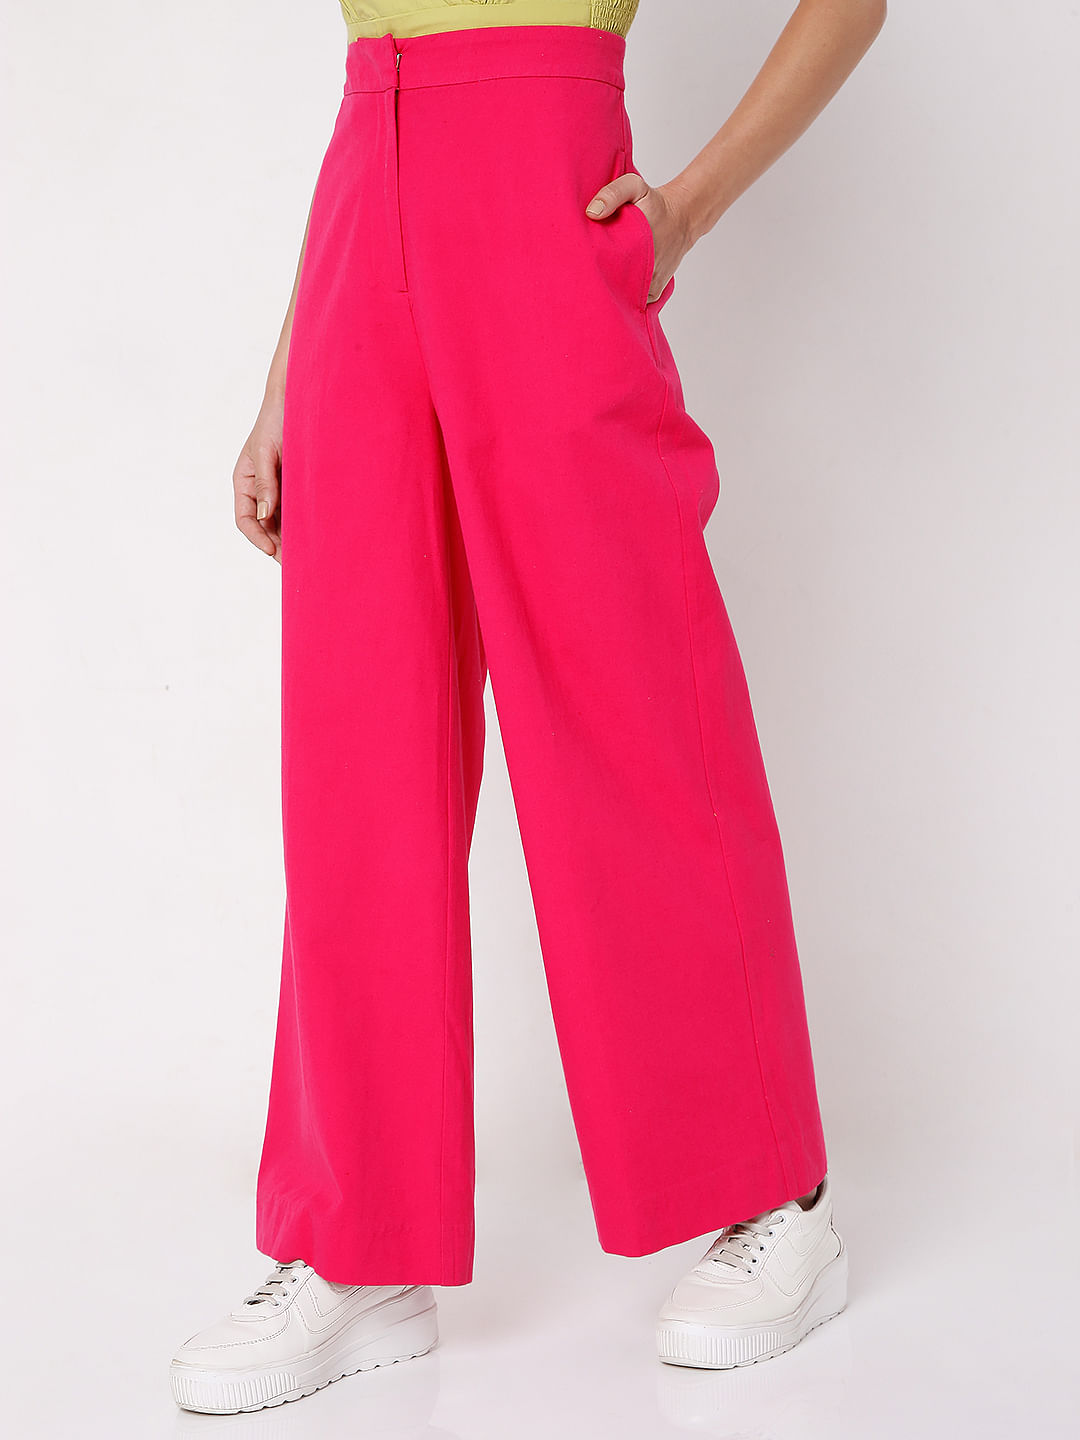 Buy Pink WideLeg Pants Online  Label Ritu Kumar India Store View